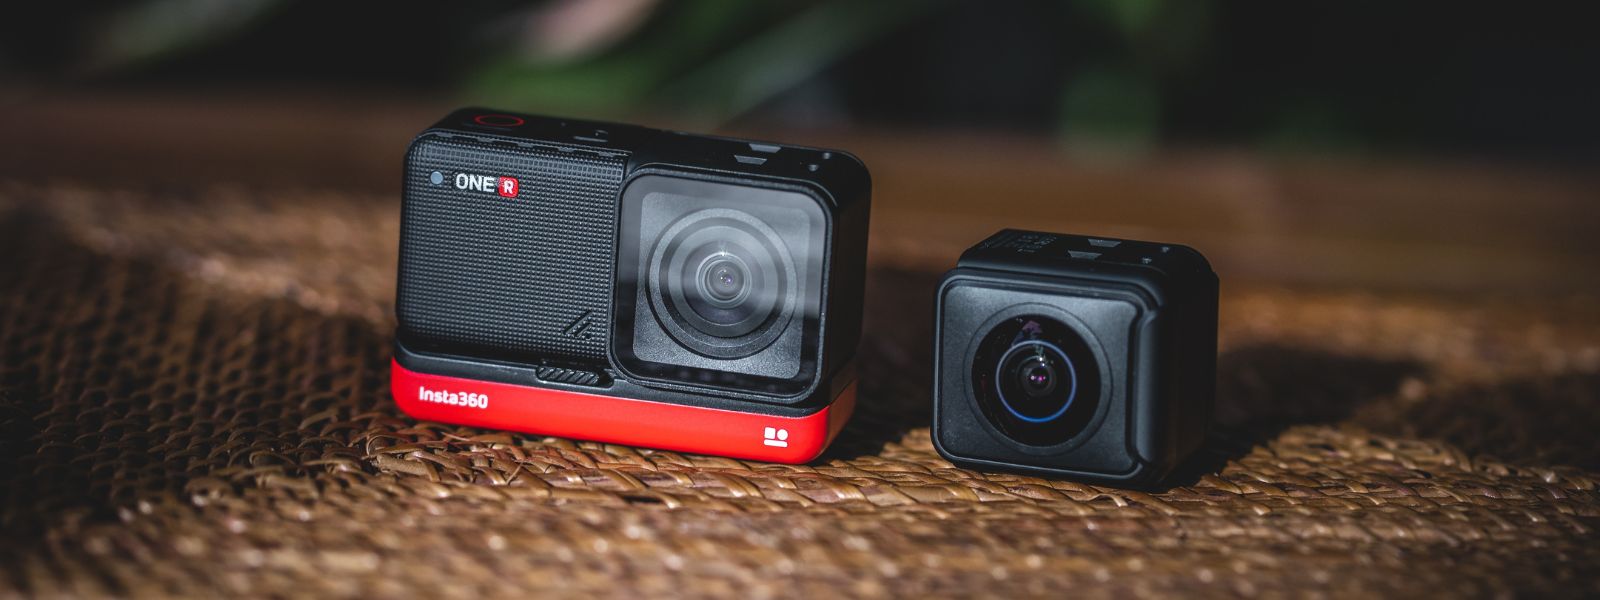 Capturez l'aventure avec la Caméra Insta360 moto !